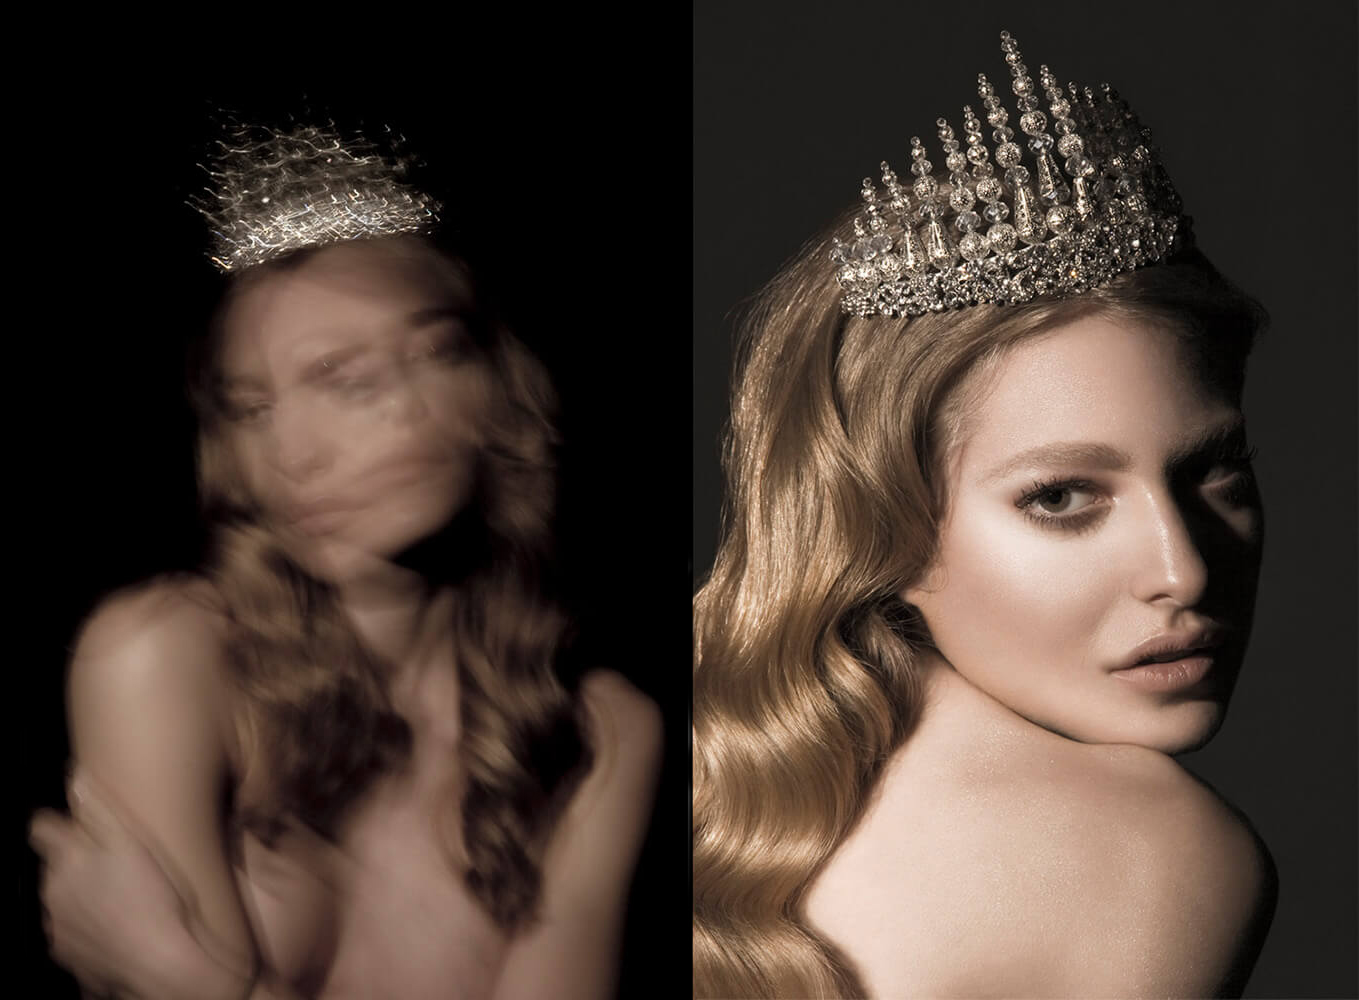 Angel-Ruiz-Ruiz-editorial-Beauty-mirror-mirror-Magazine-avenue-illustrated-queen-crown-maleficent-1359x1000